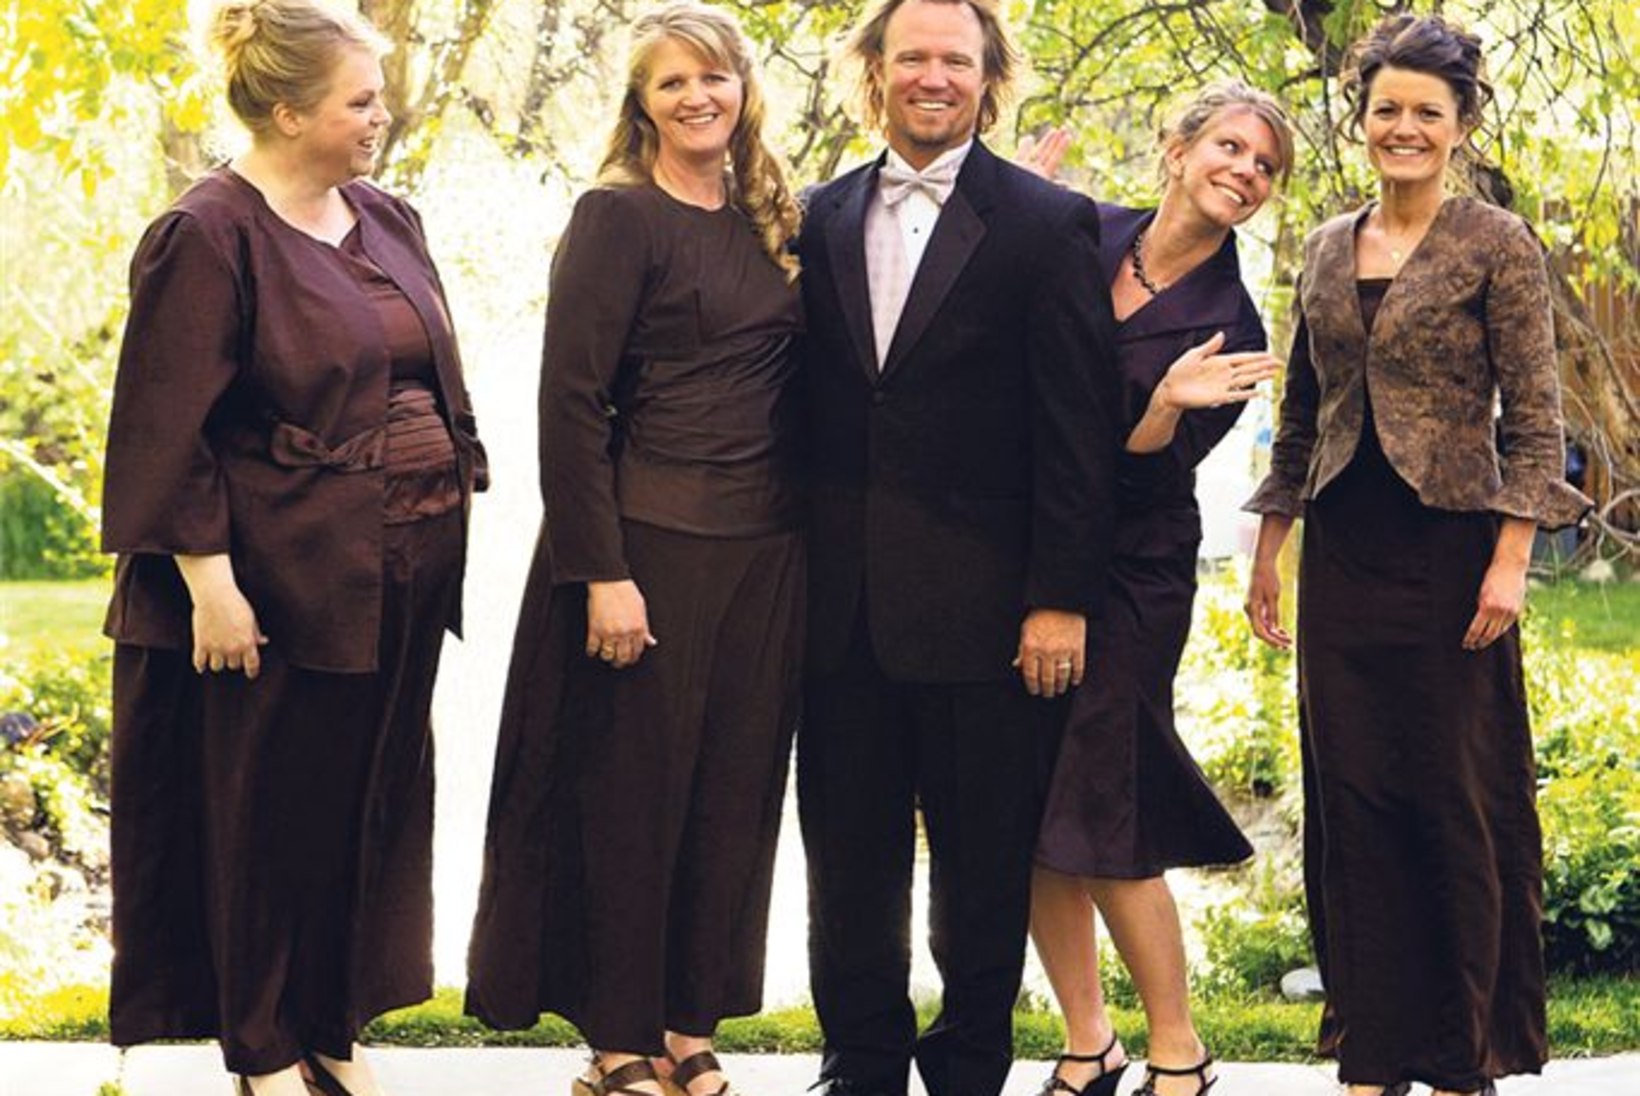 Mormoon ja tema neli naist: "Oleme ju normaalne pere!"